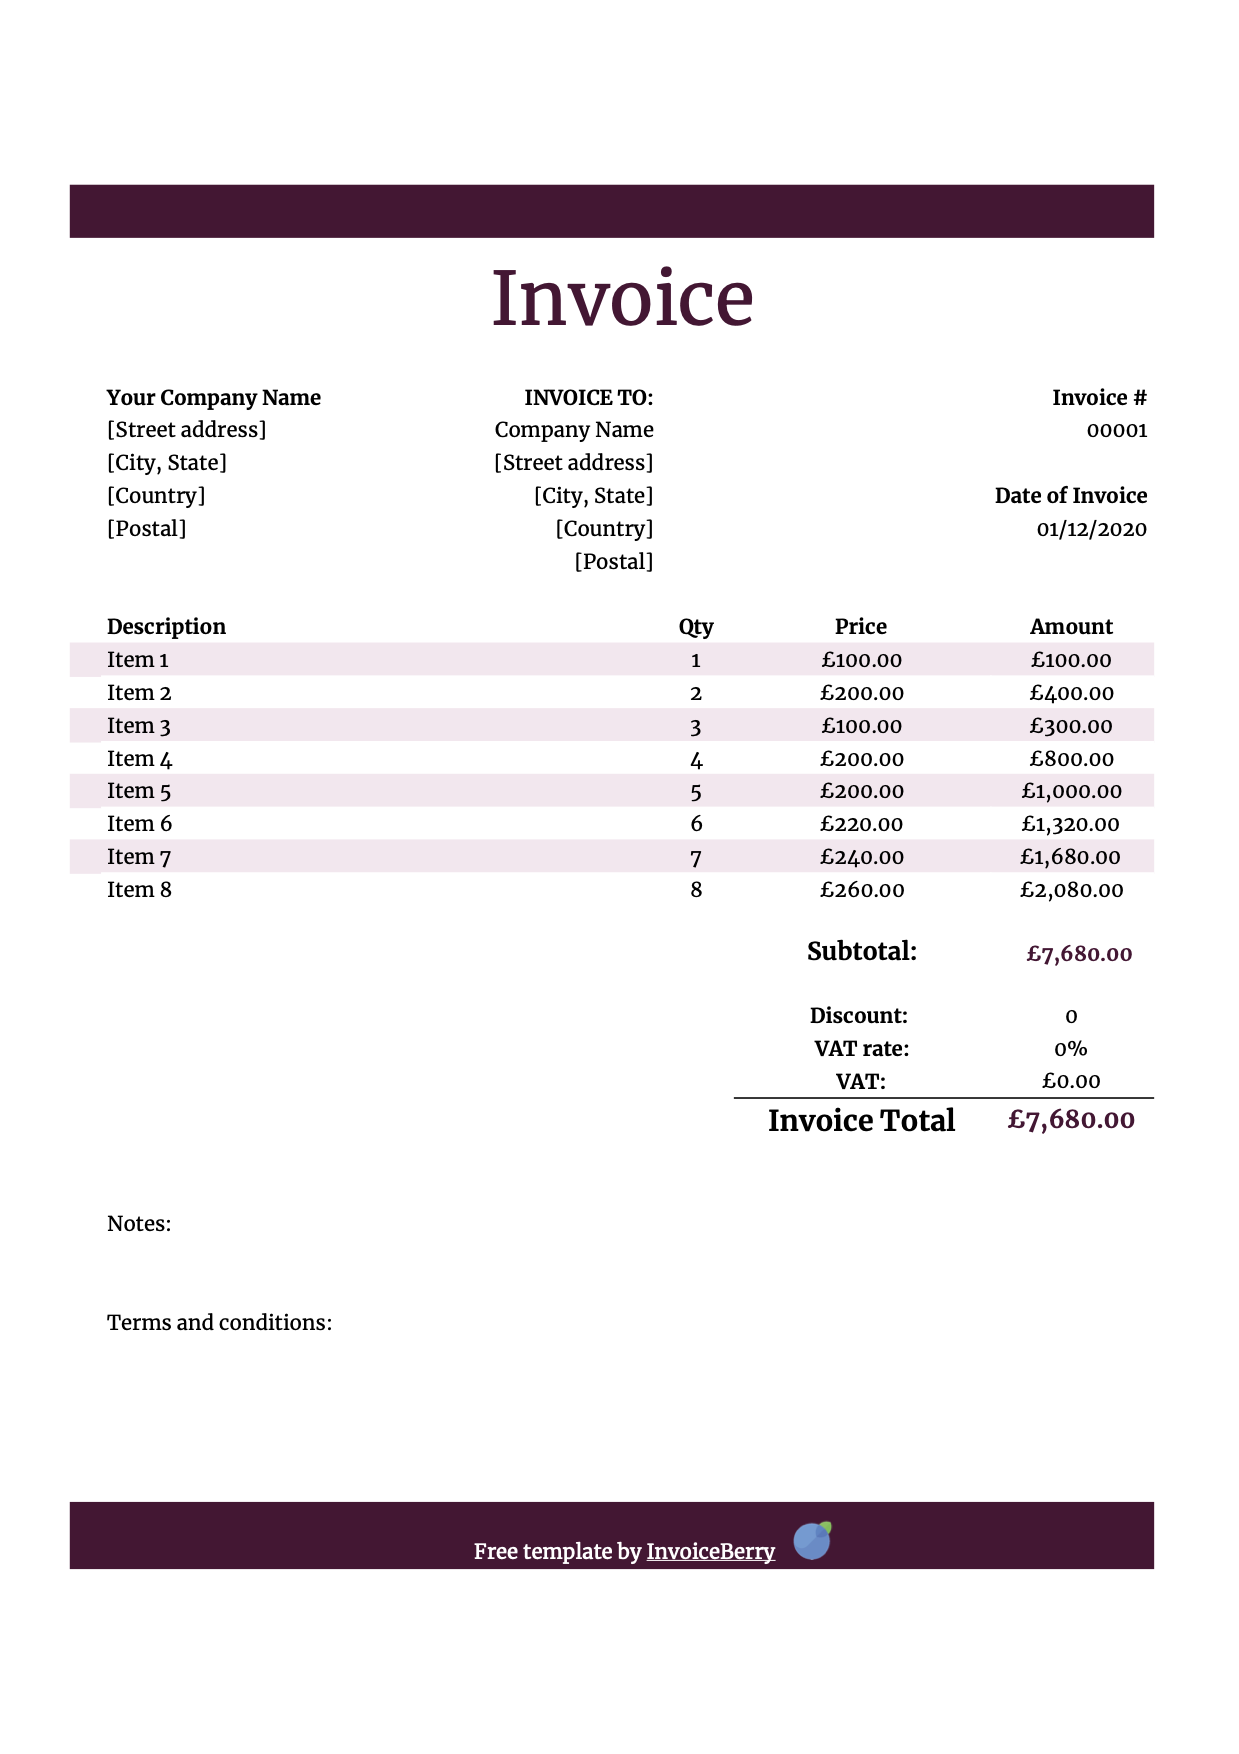 Free UK Invoice Template Sample #23 Download  InvoiceBerry For Sample Invoice Template Uk